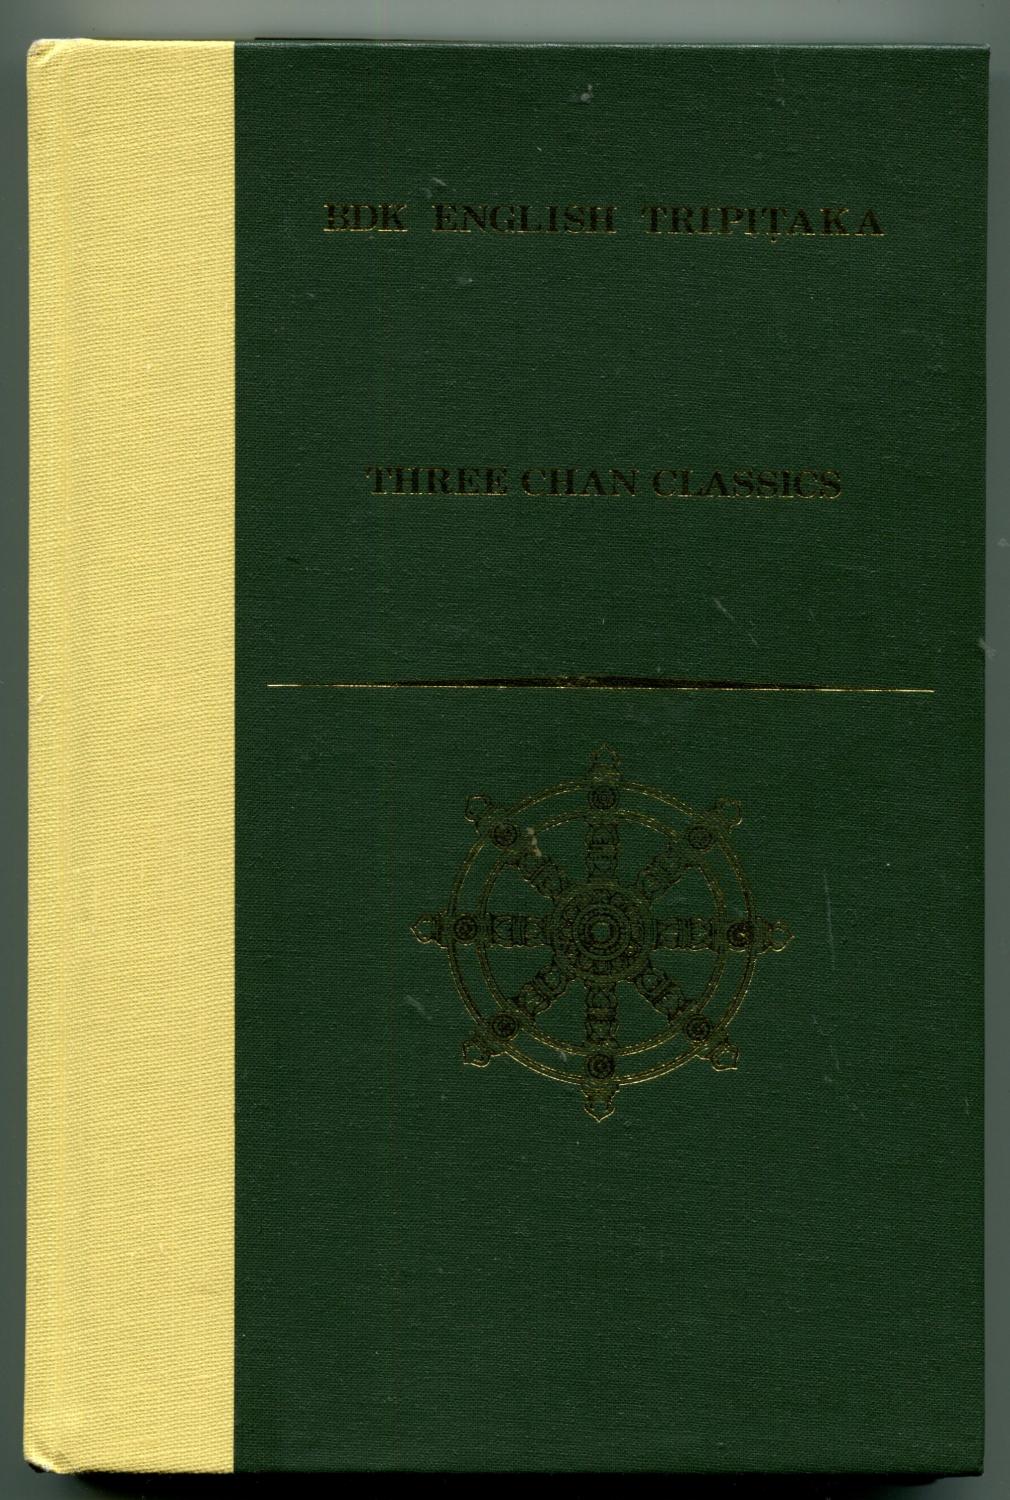 Three Chan Classics (Bdk English Tripitaka, 74-I, Ii, III, Band 74)